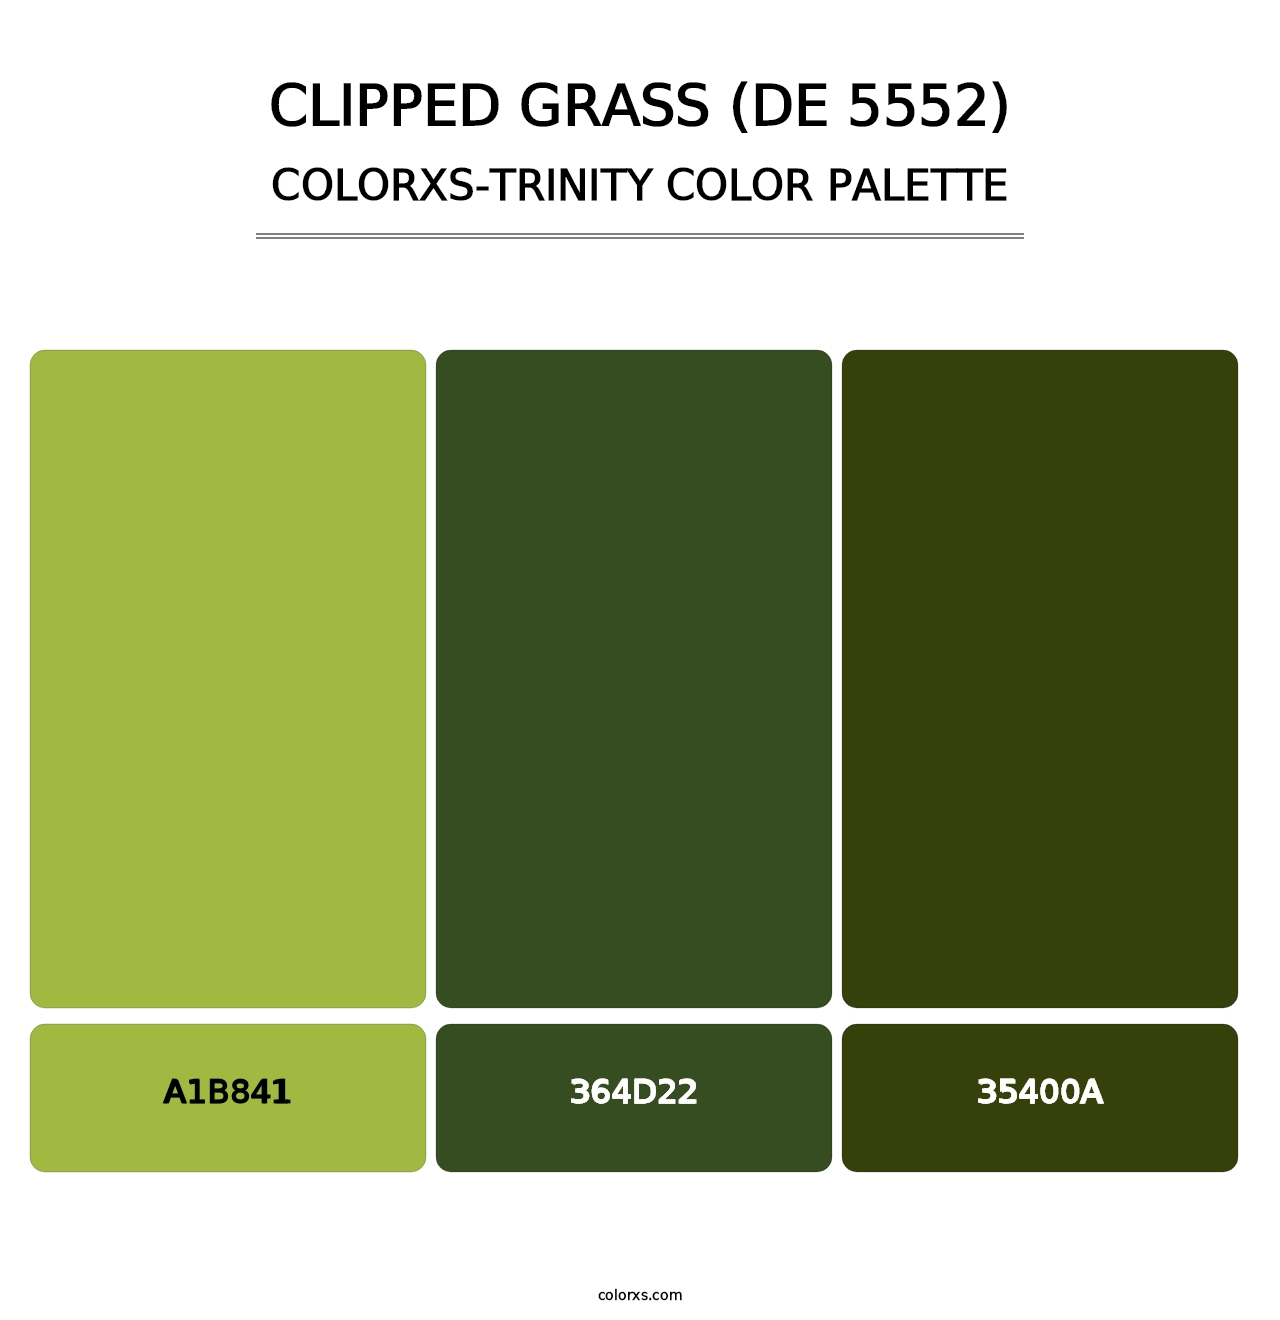 Clipped Grass (DE 5552) - Colorxs Trinity Palette